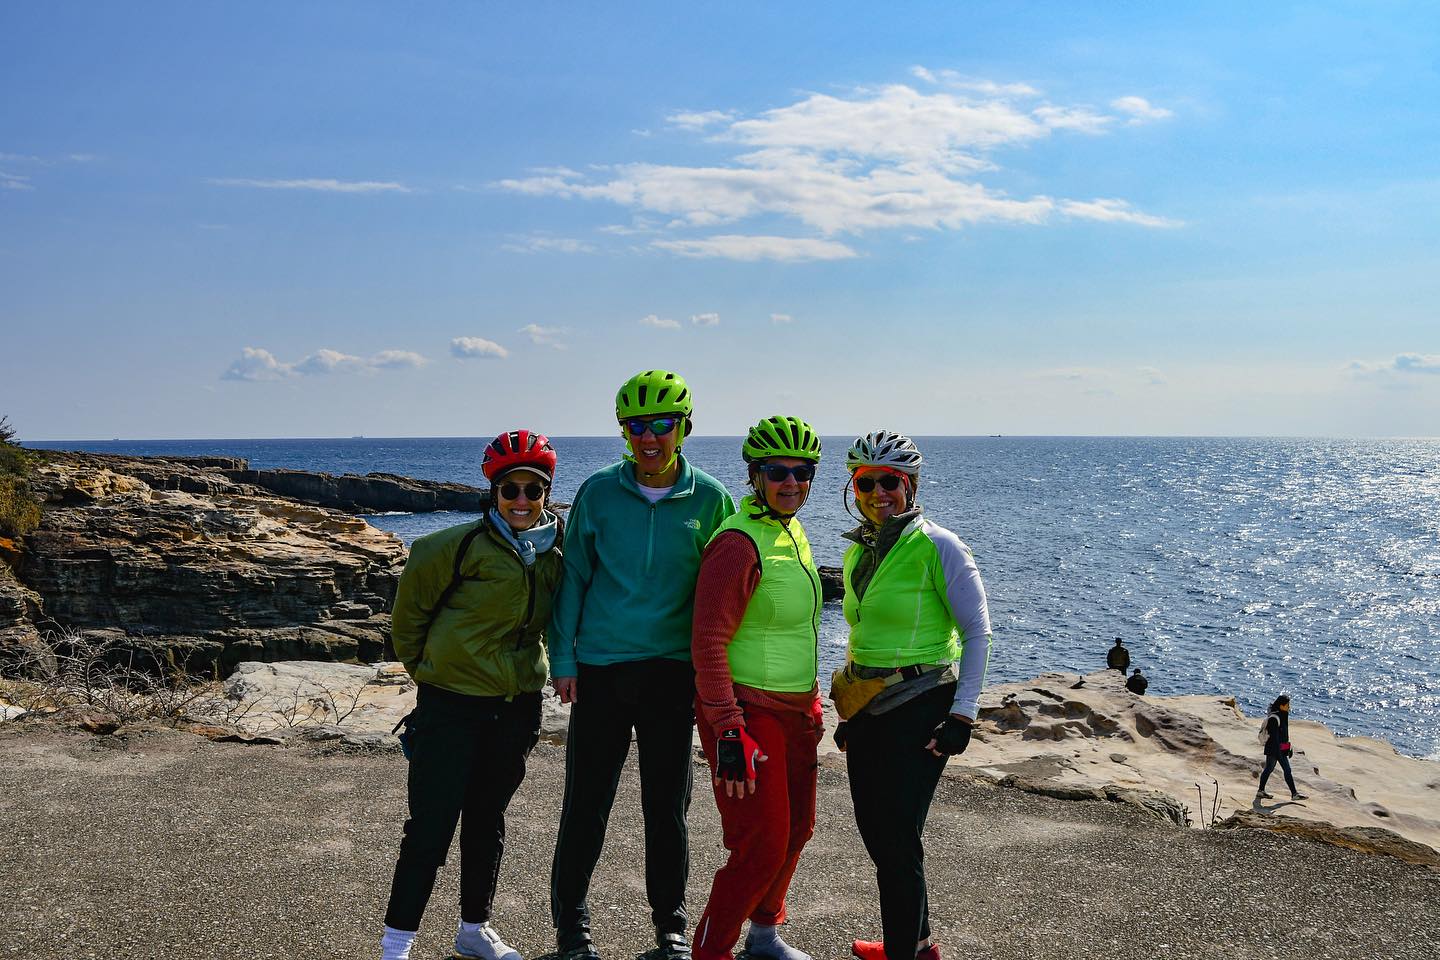 Pedaling into Adventure! KUMANO-KODO Pilgrimage Bike & Hike Tour begins